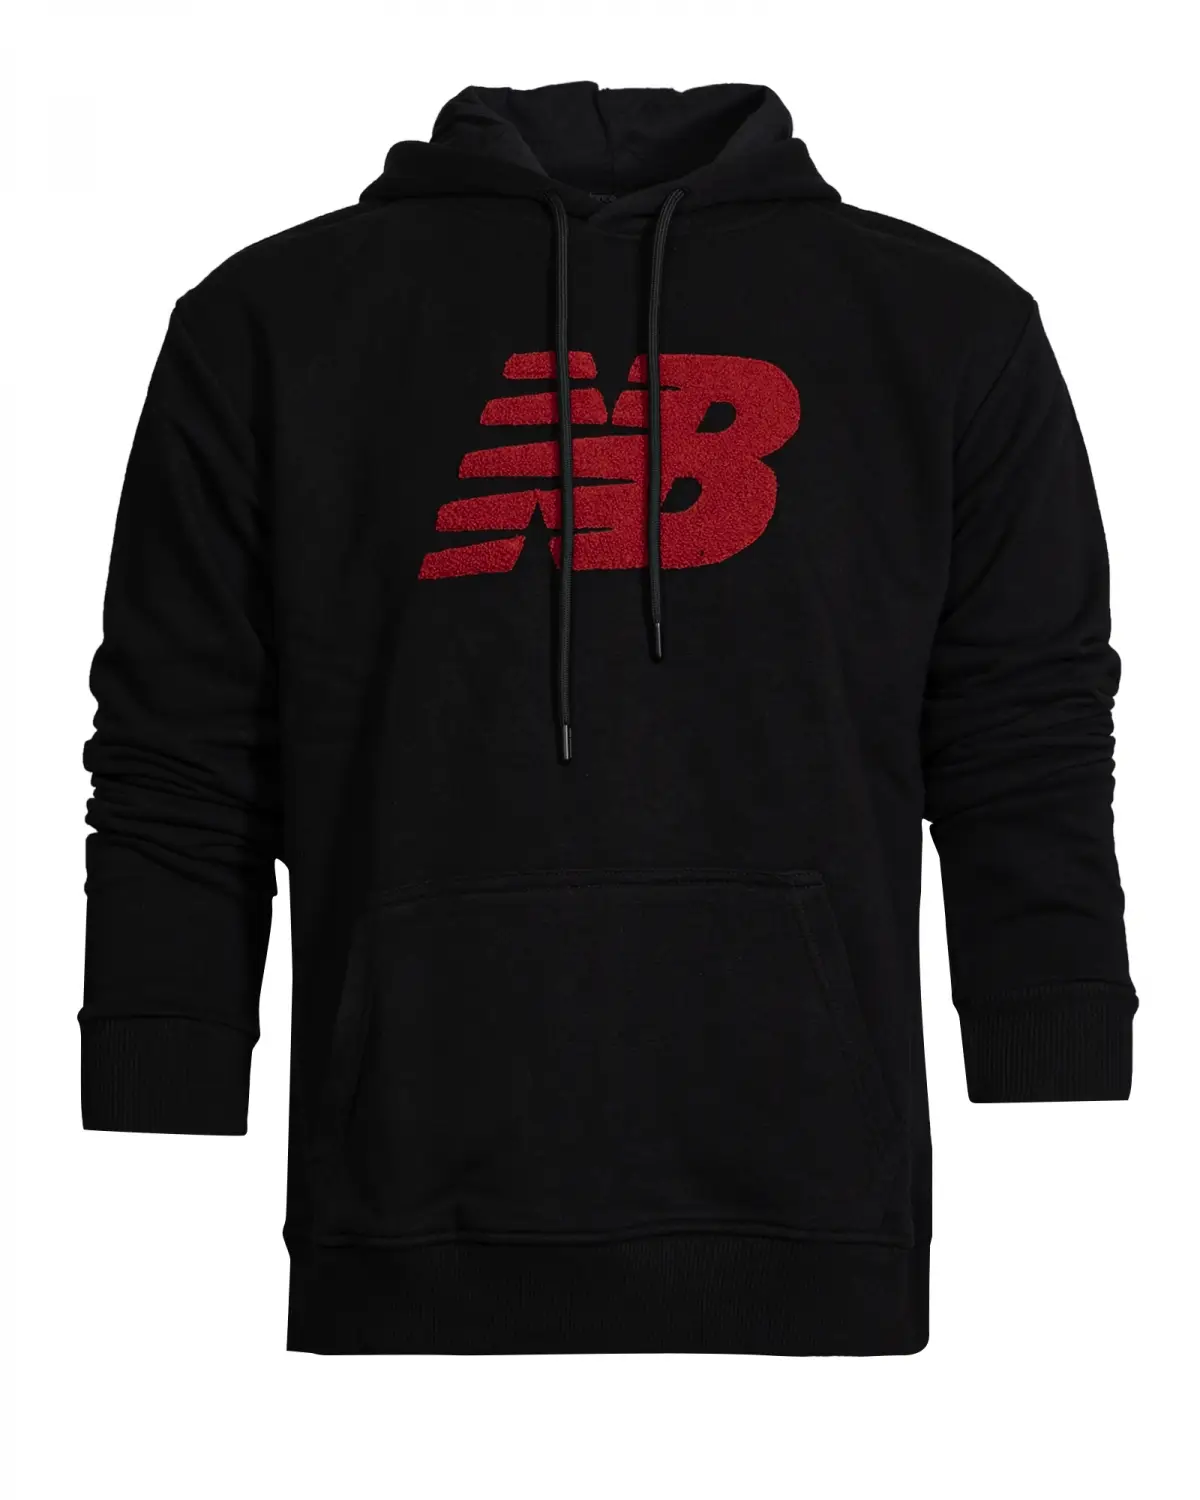 New Balance Lifestyle Siyah Erkek Kapüşonlu Sweatshirt - MPH3148-BK